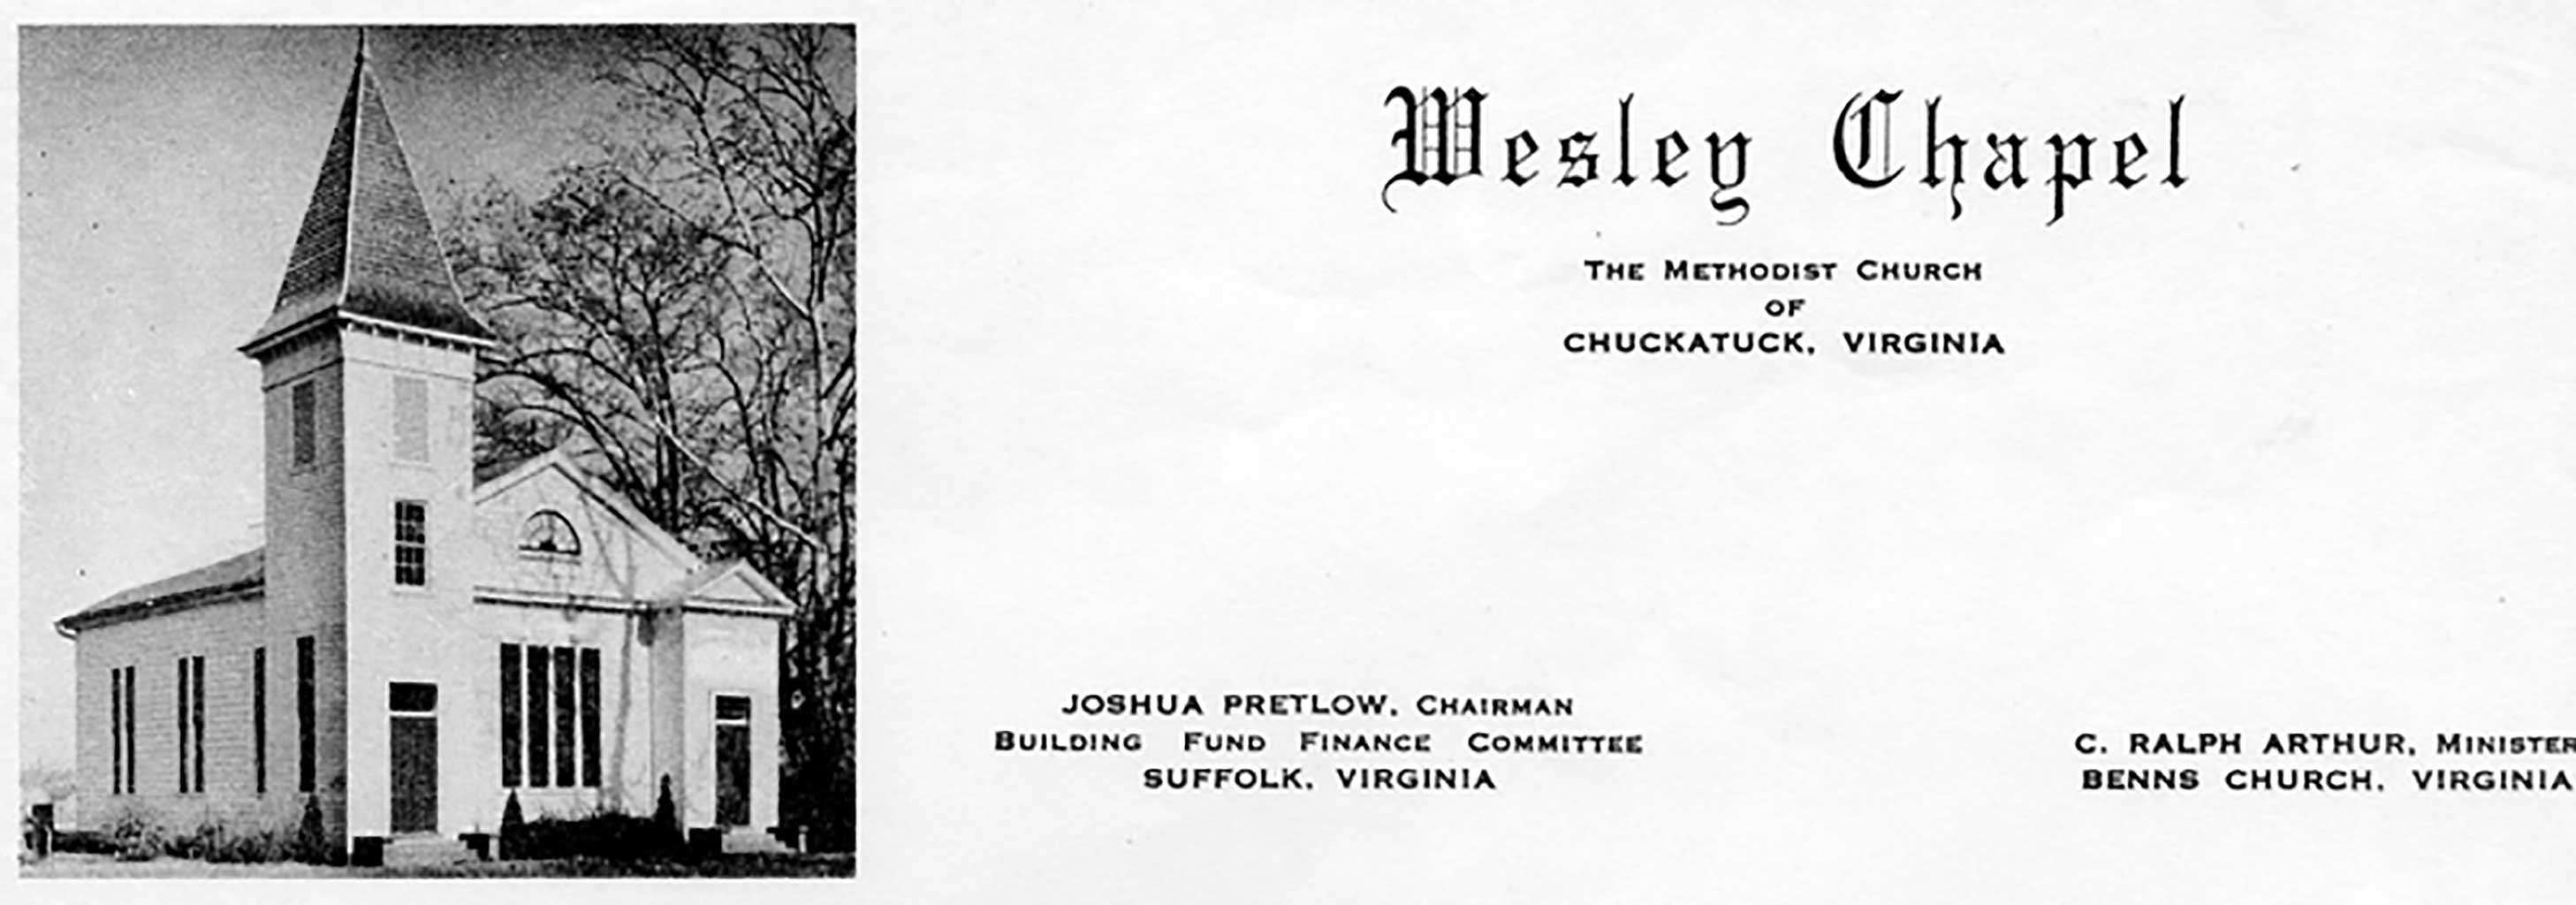 wesley-chapel-methodist-church-letter-head-img136